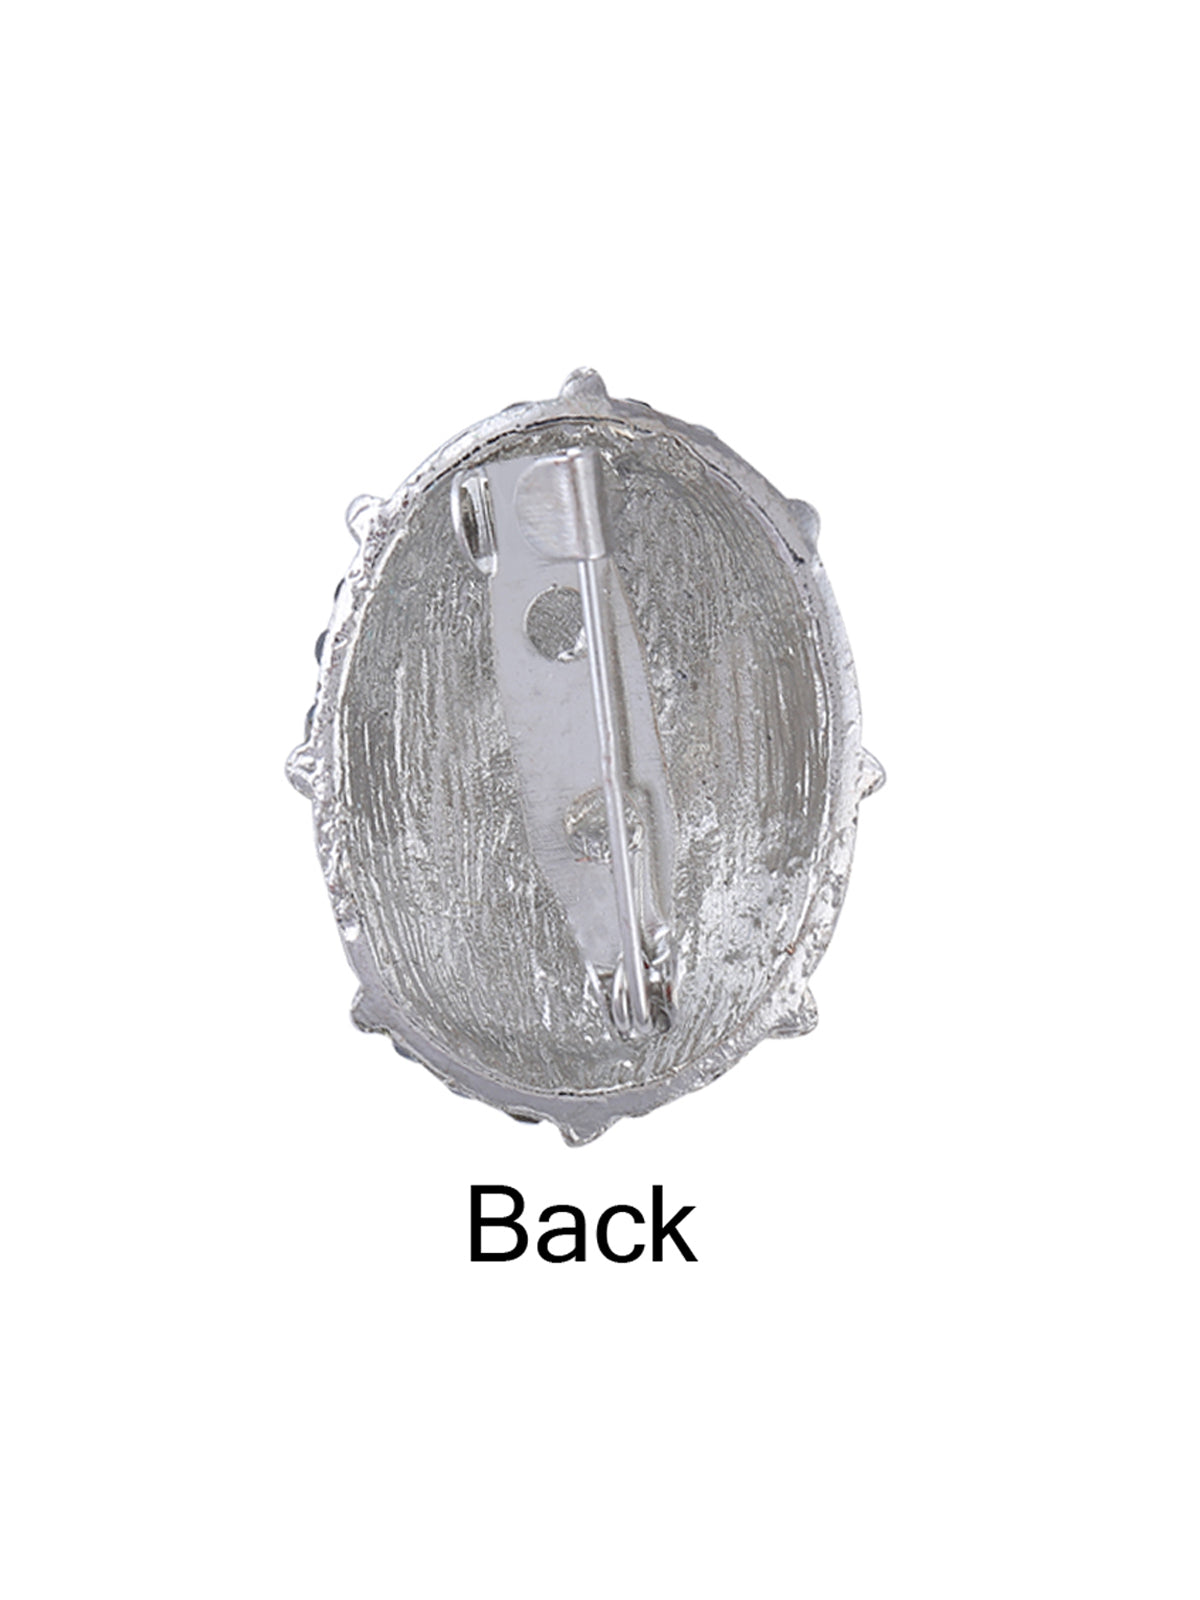 Dazzling Oval Shape Diamond Brooch Pin